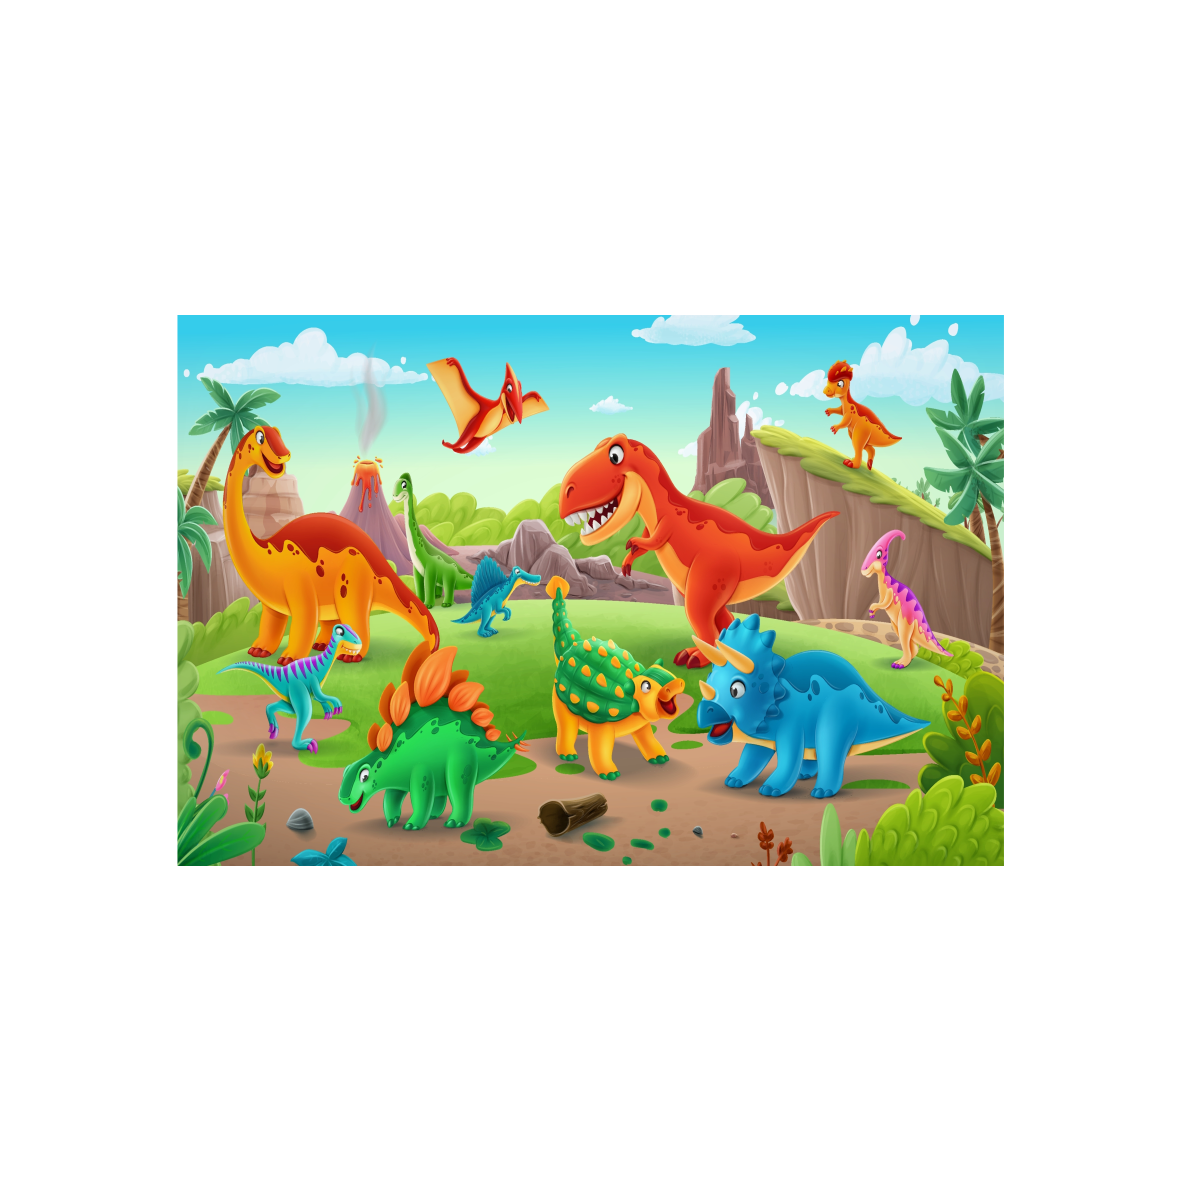 Dinossauro desenho realista